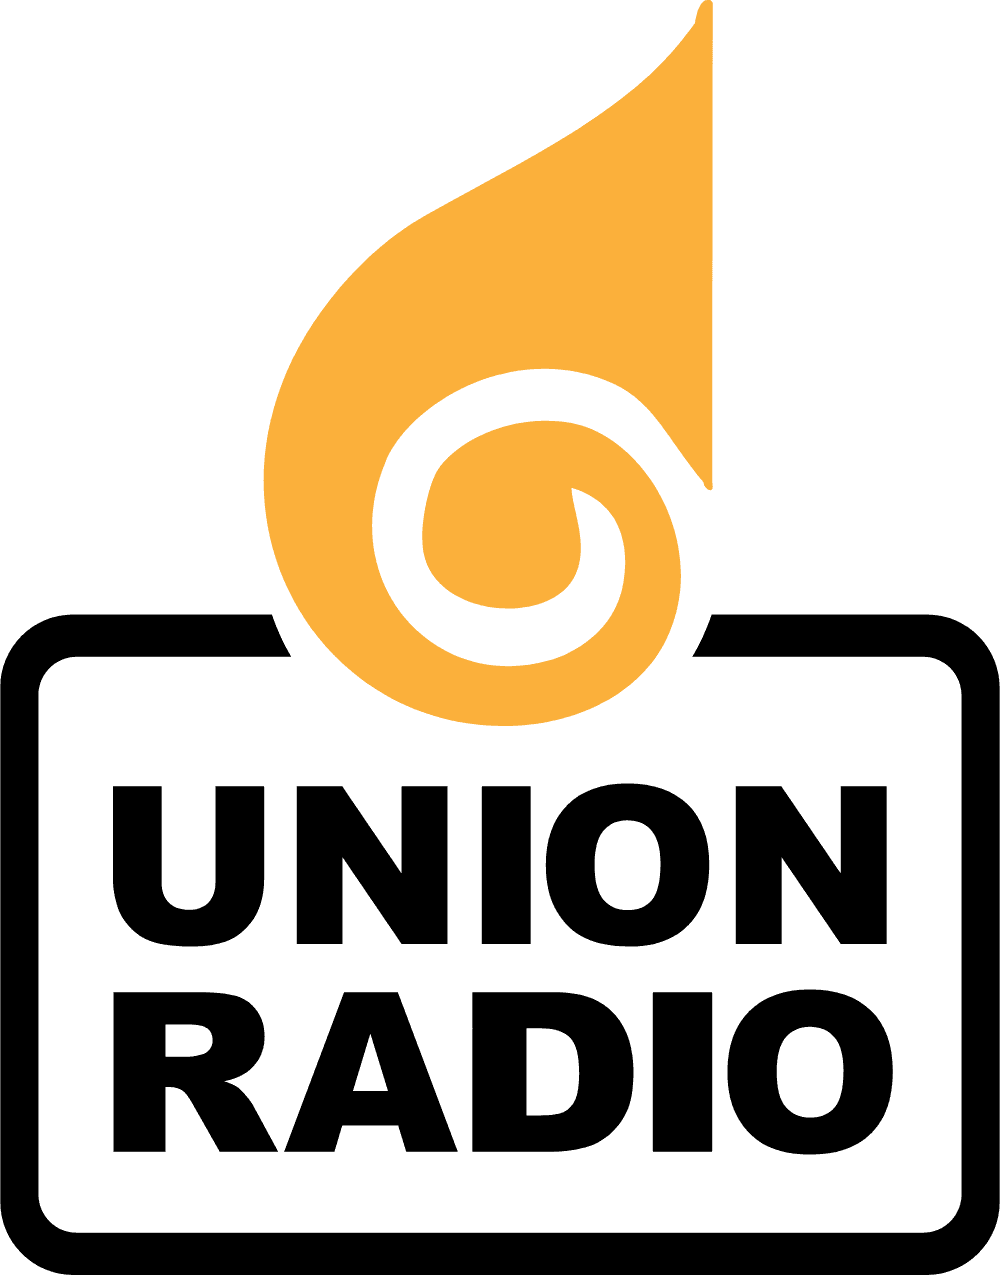 Union Radio Logo download